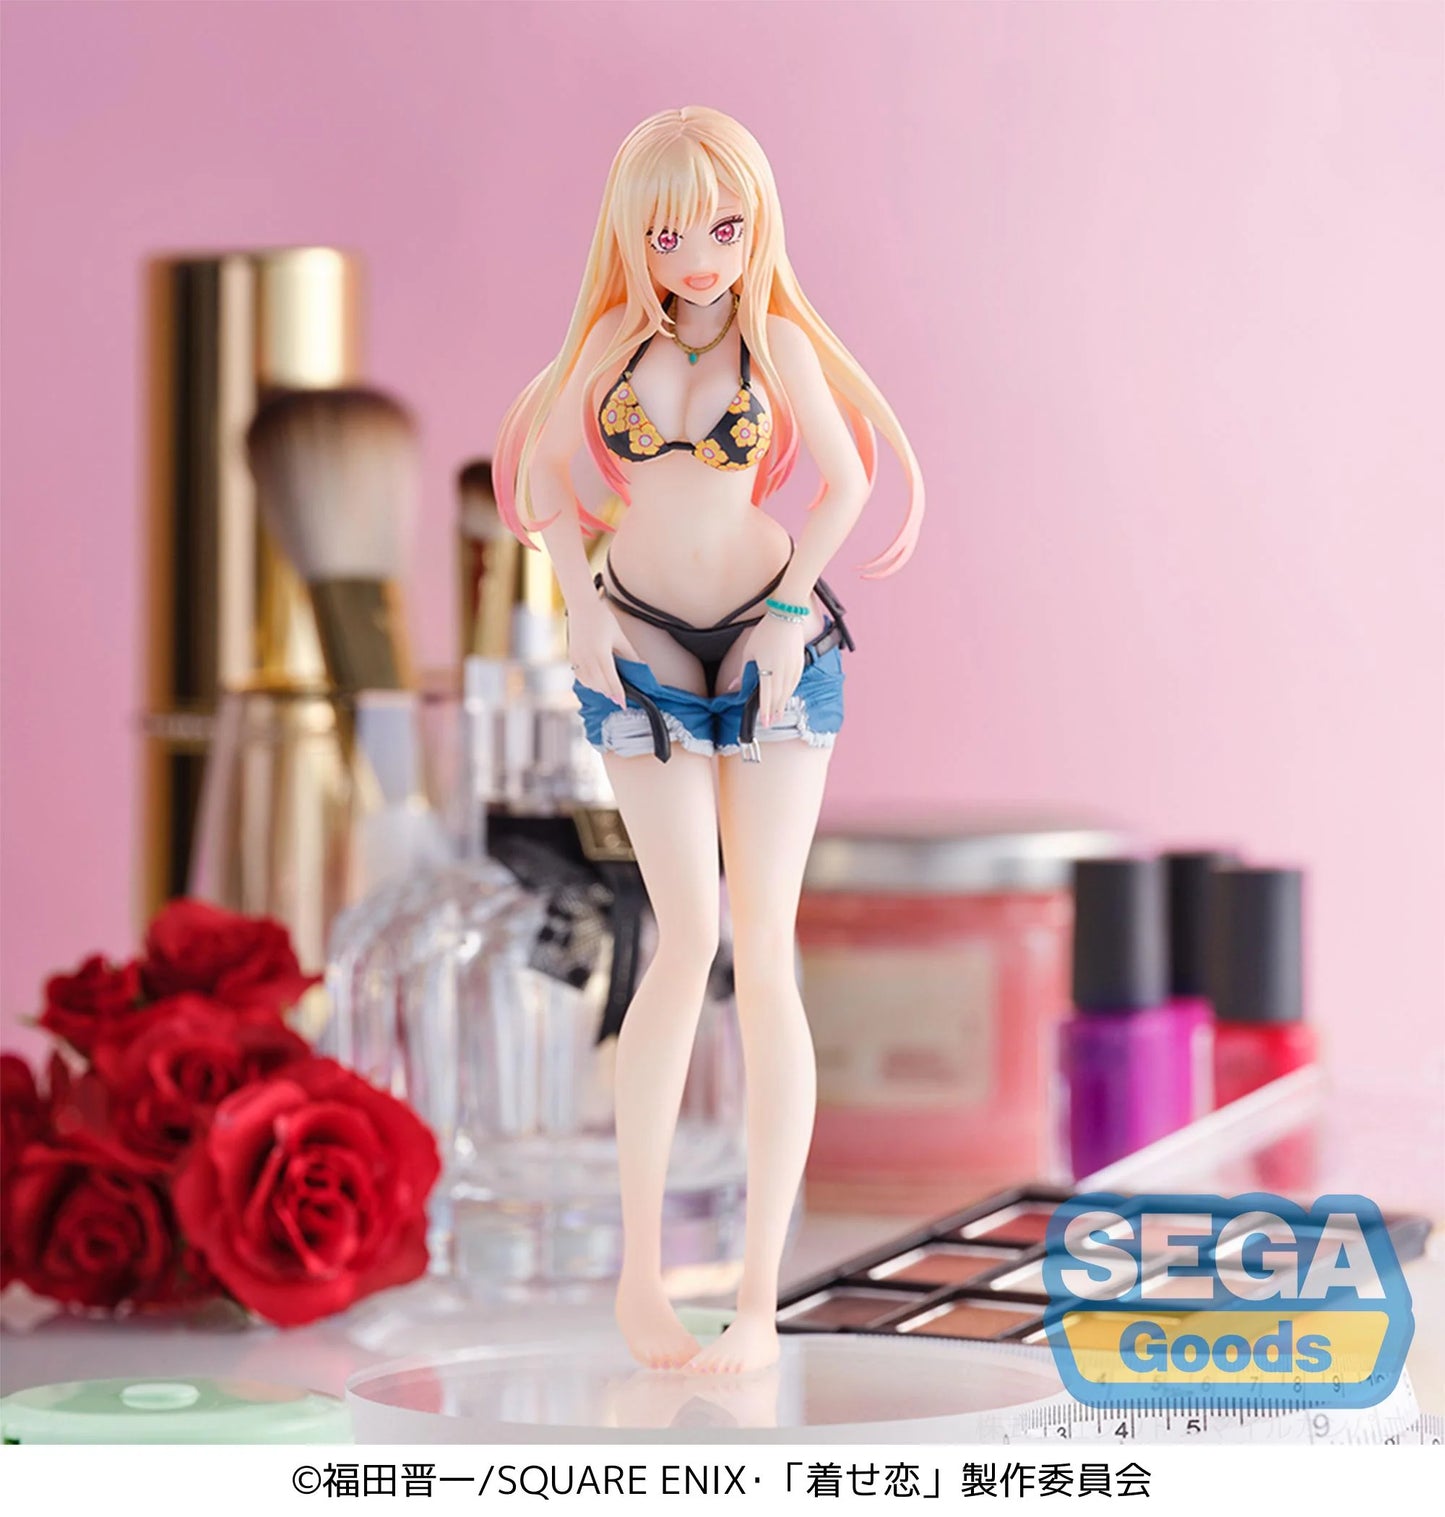 PREVENTA Sega Figures Luminasta: My Dress Up Darling - Marin Kitagawa First Measurements